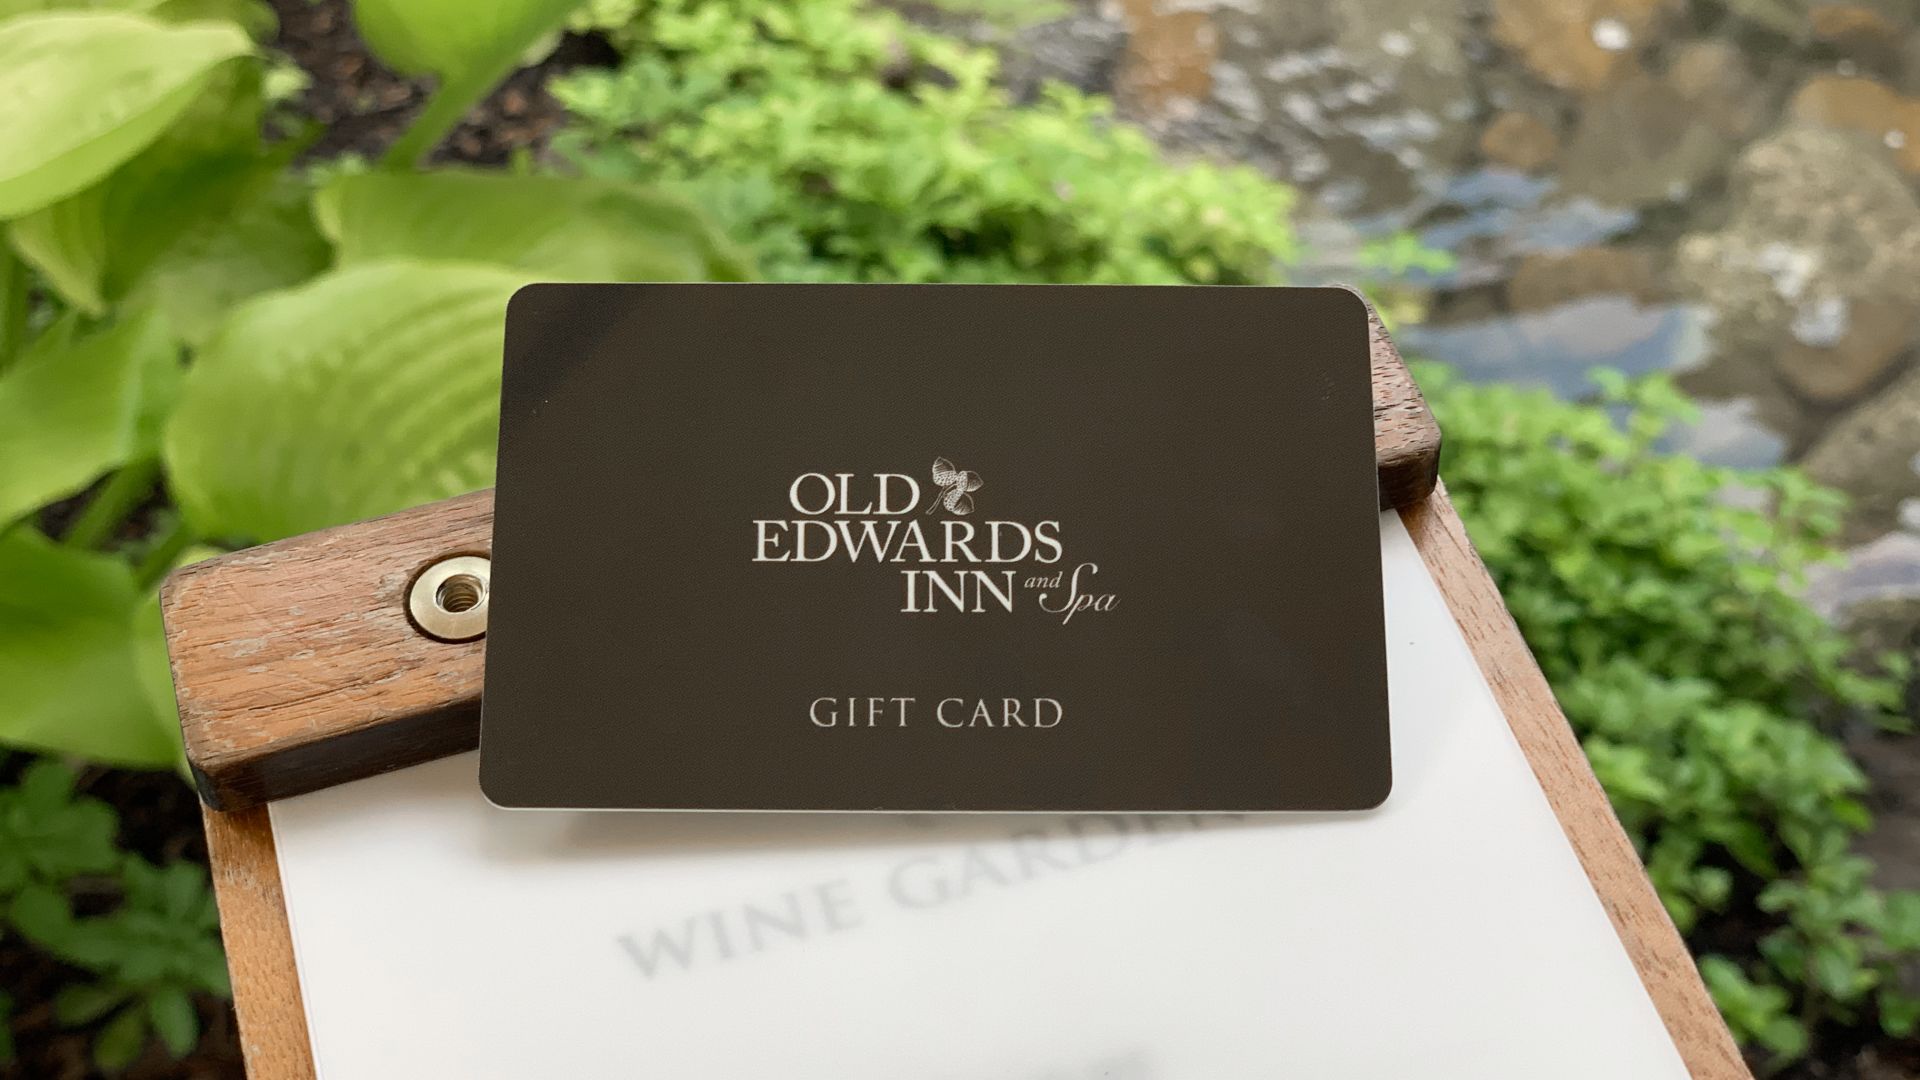 Old Edwards Gift Card in Wine Garden